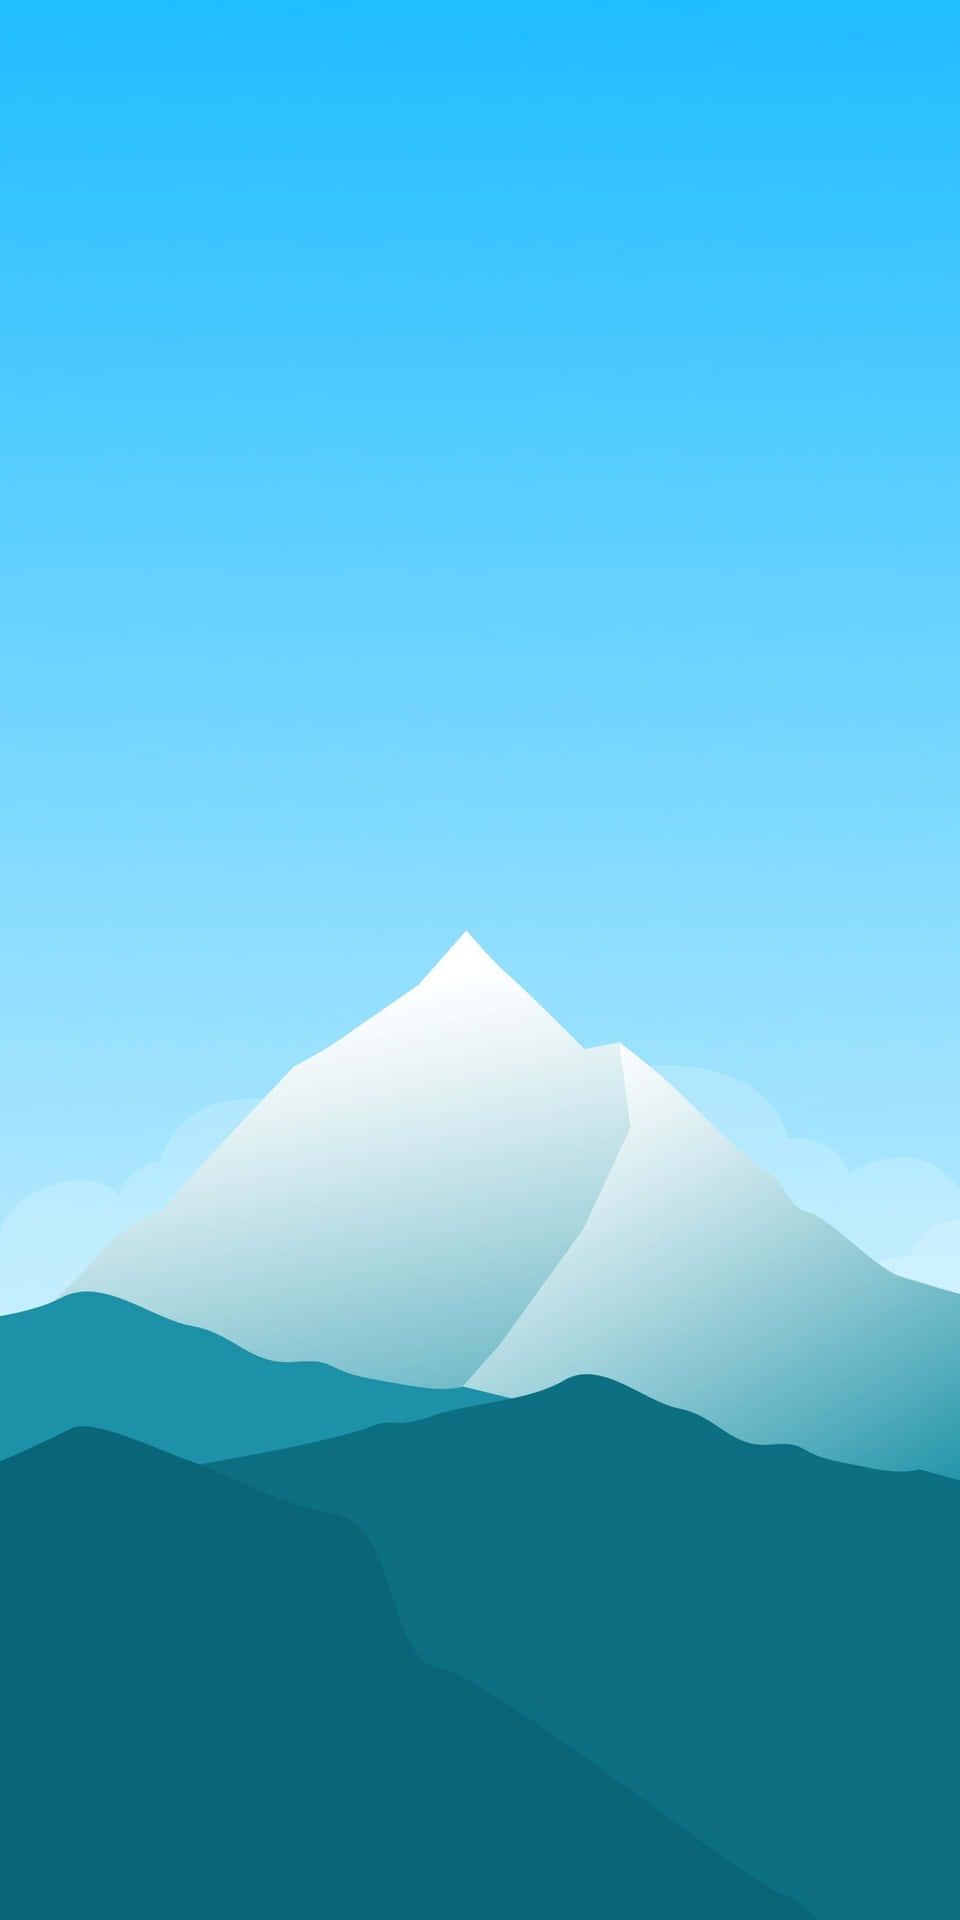 Papelde Parede Minimalista Do Pixel 3 - Montanha Branca Com Fundo Azul Claro Tonificado.